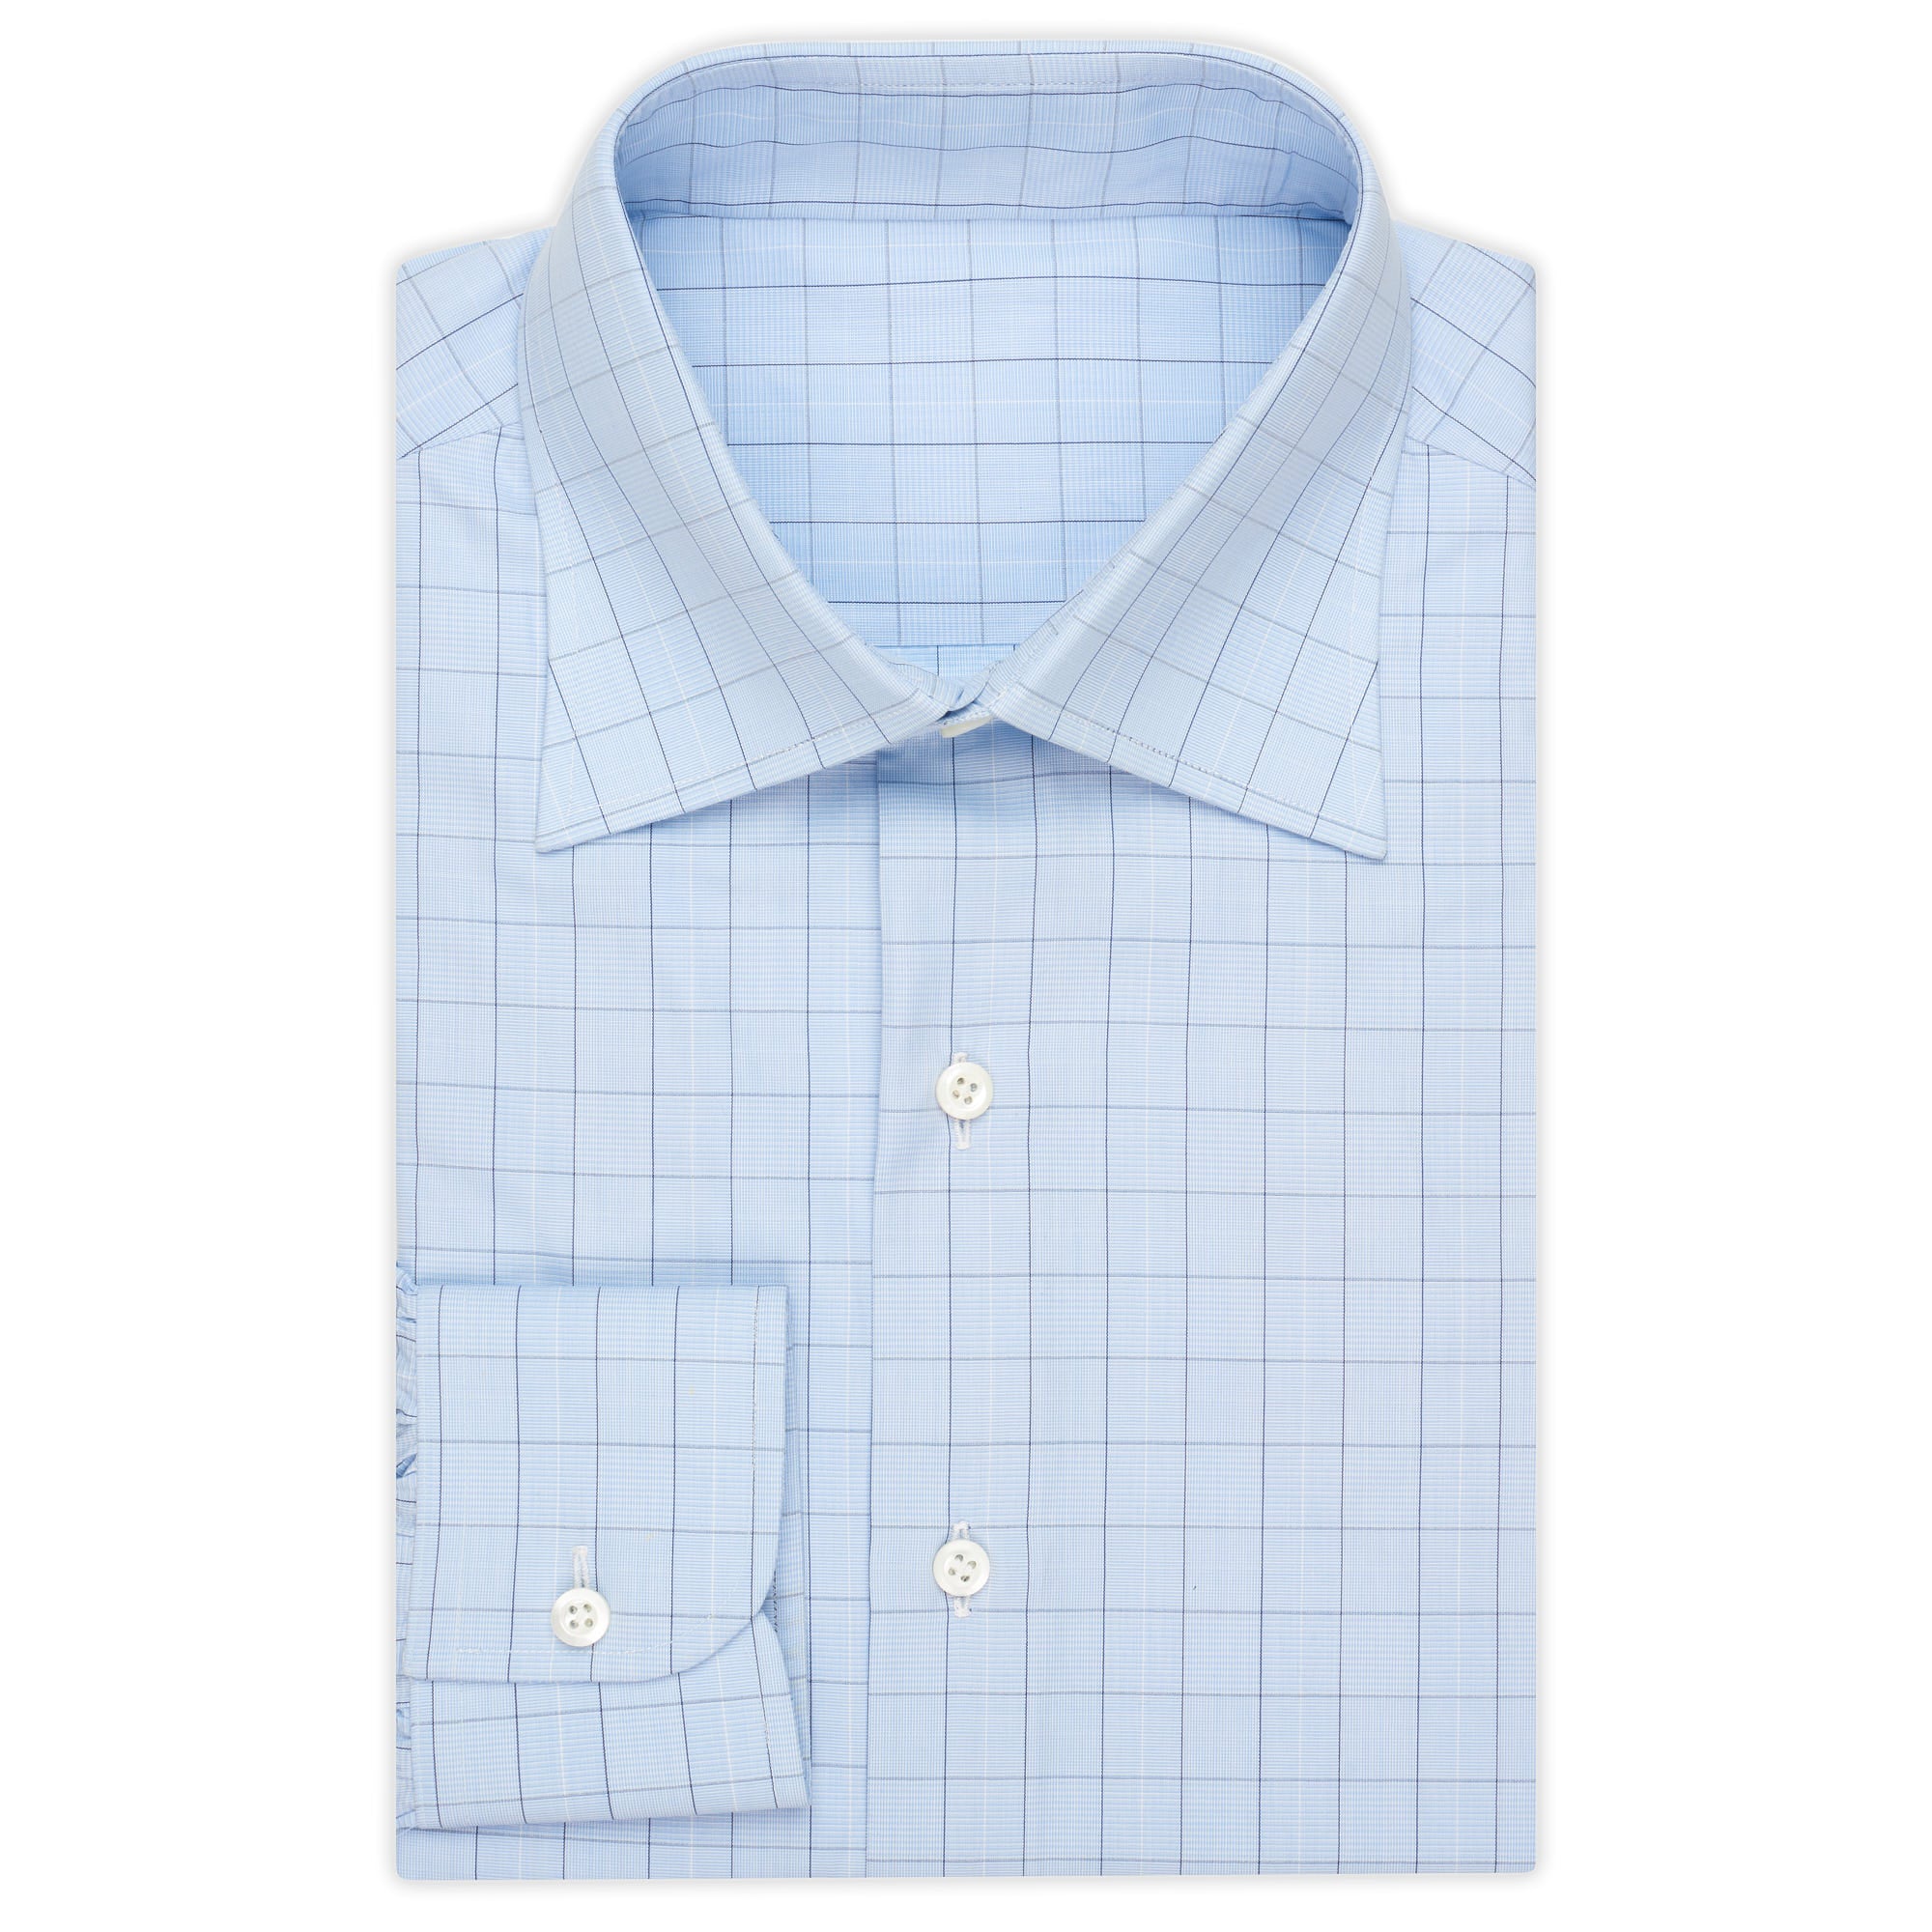 BESPOKE ATHENS Handmade Blue Plaid Cotton Dress Shirt 43 NEW US 17 Classic Fit